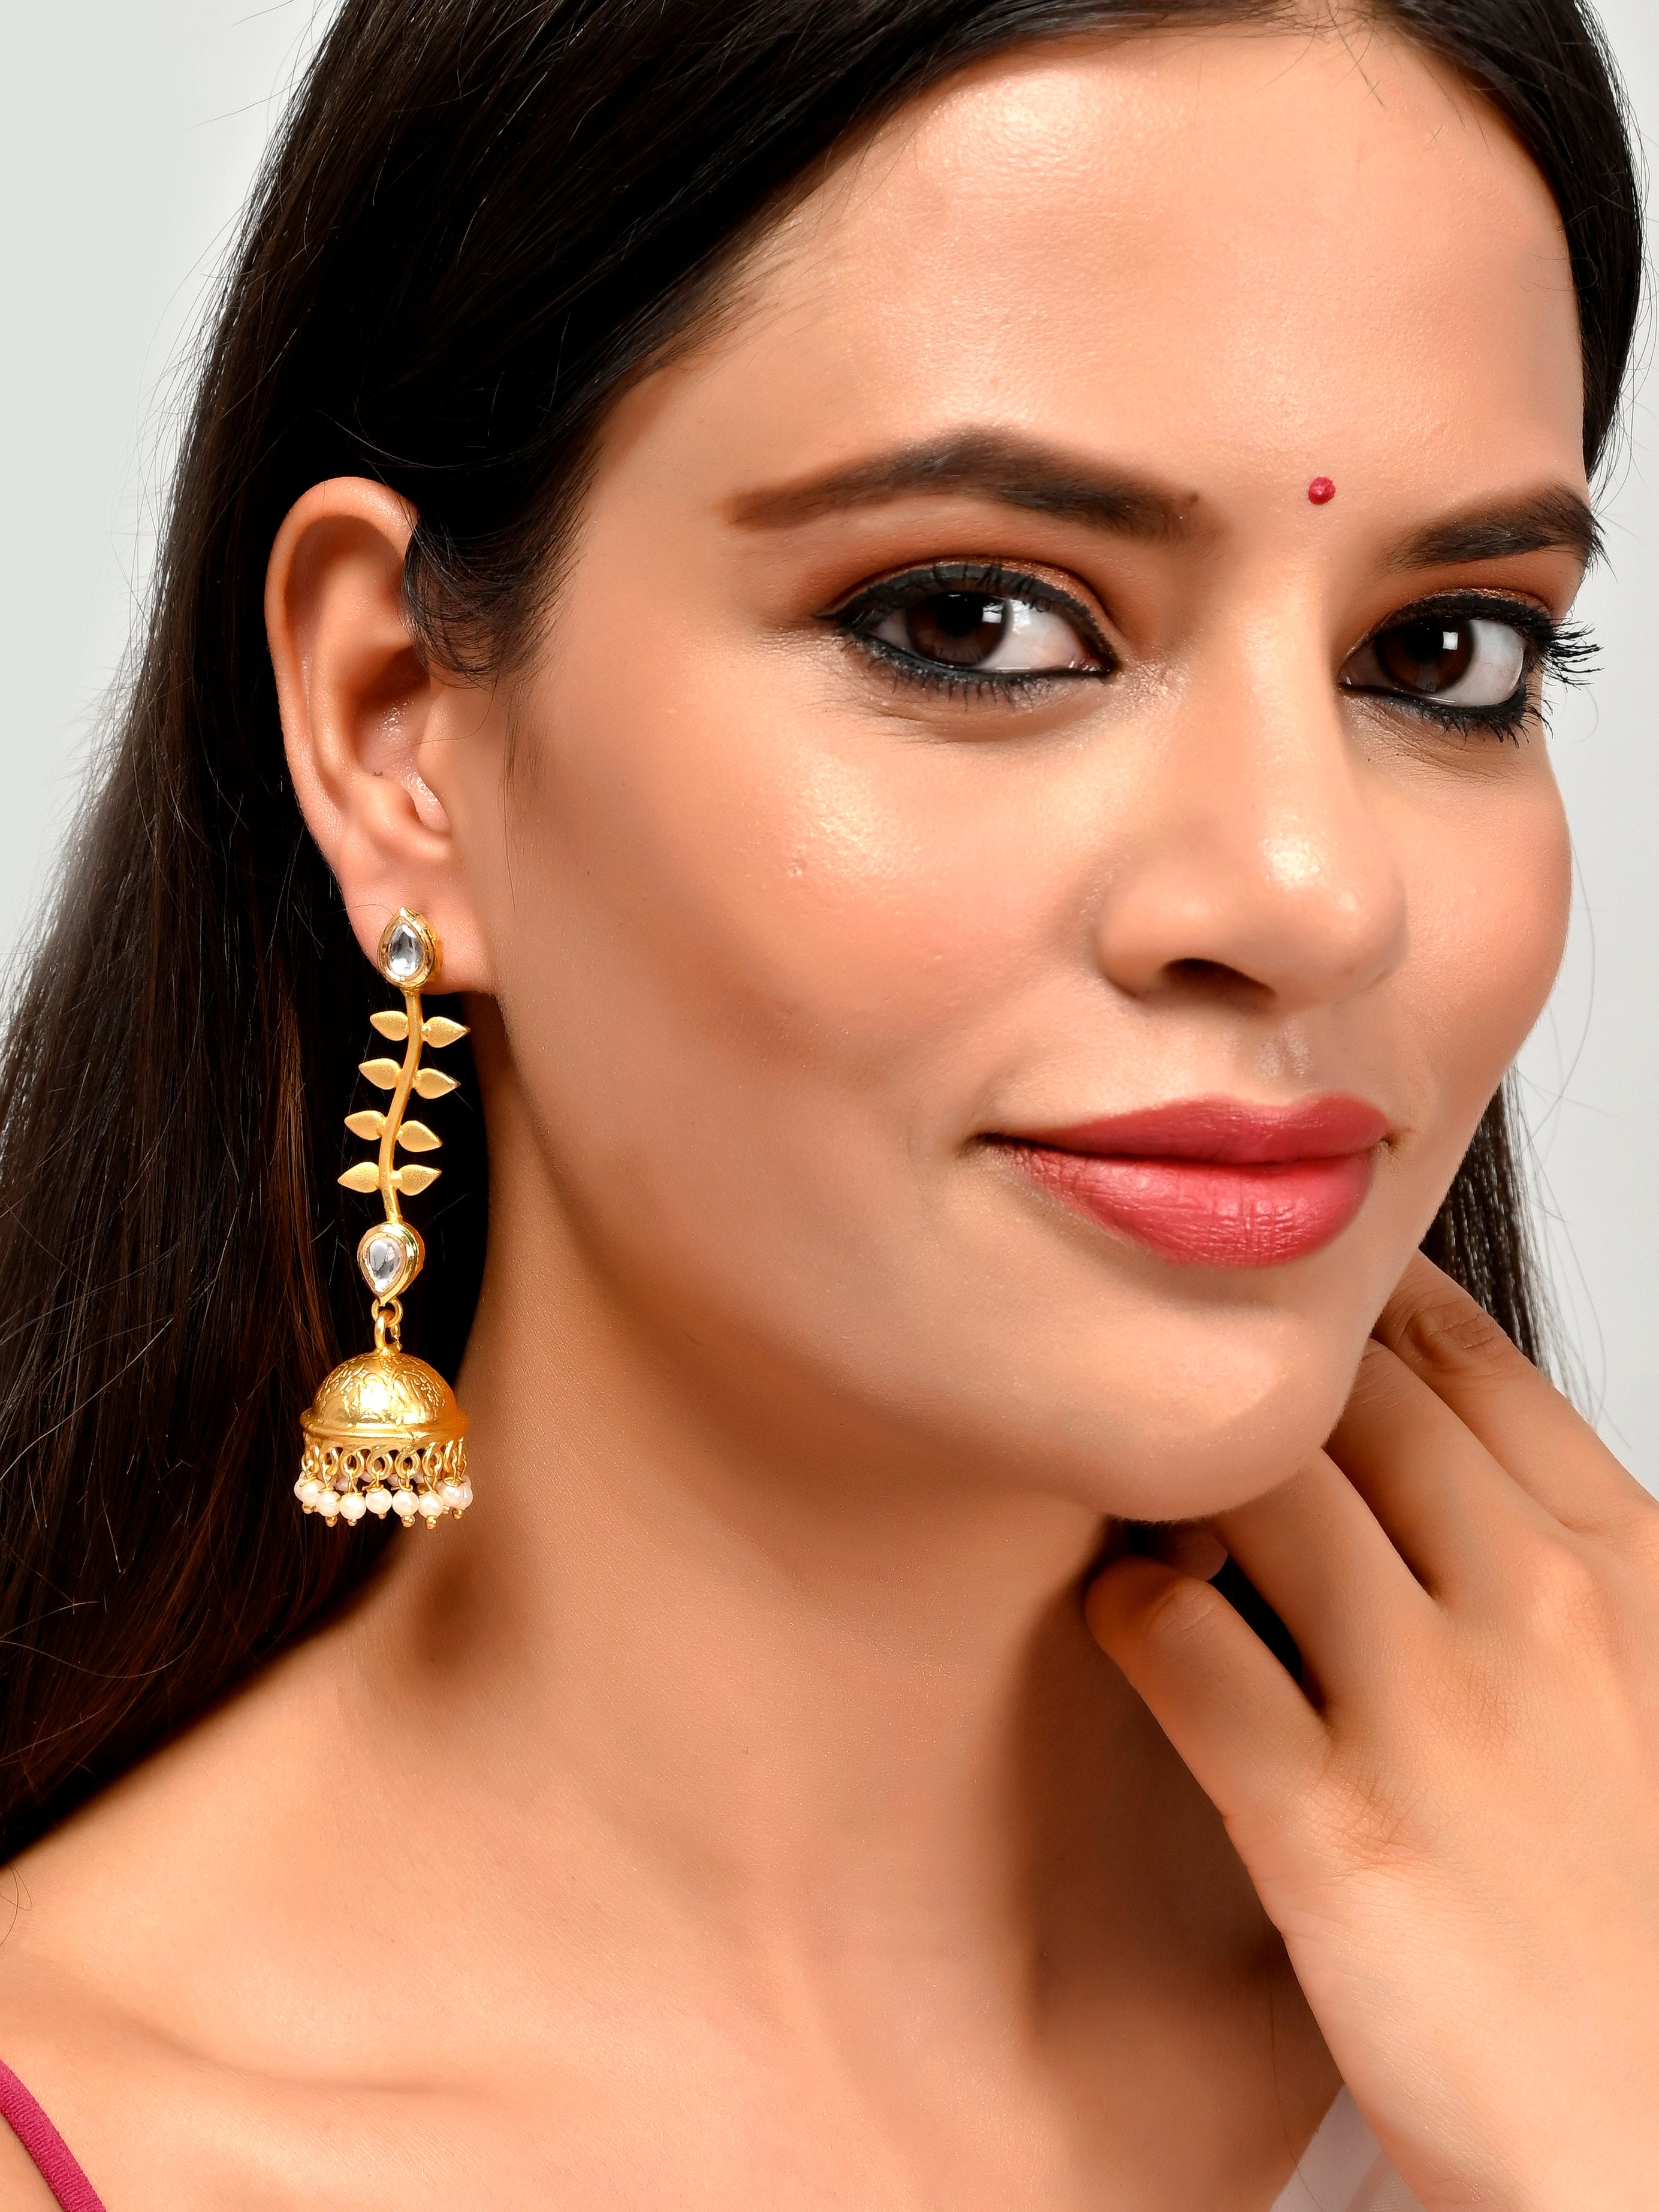 Elegant Alia Bhatt showcasing stunning jhumka